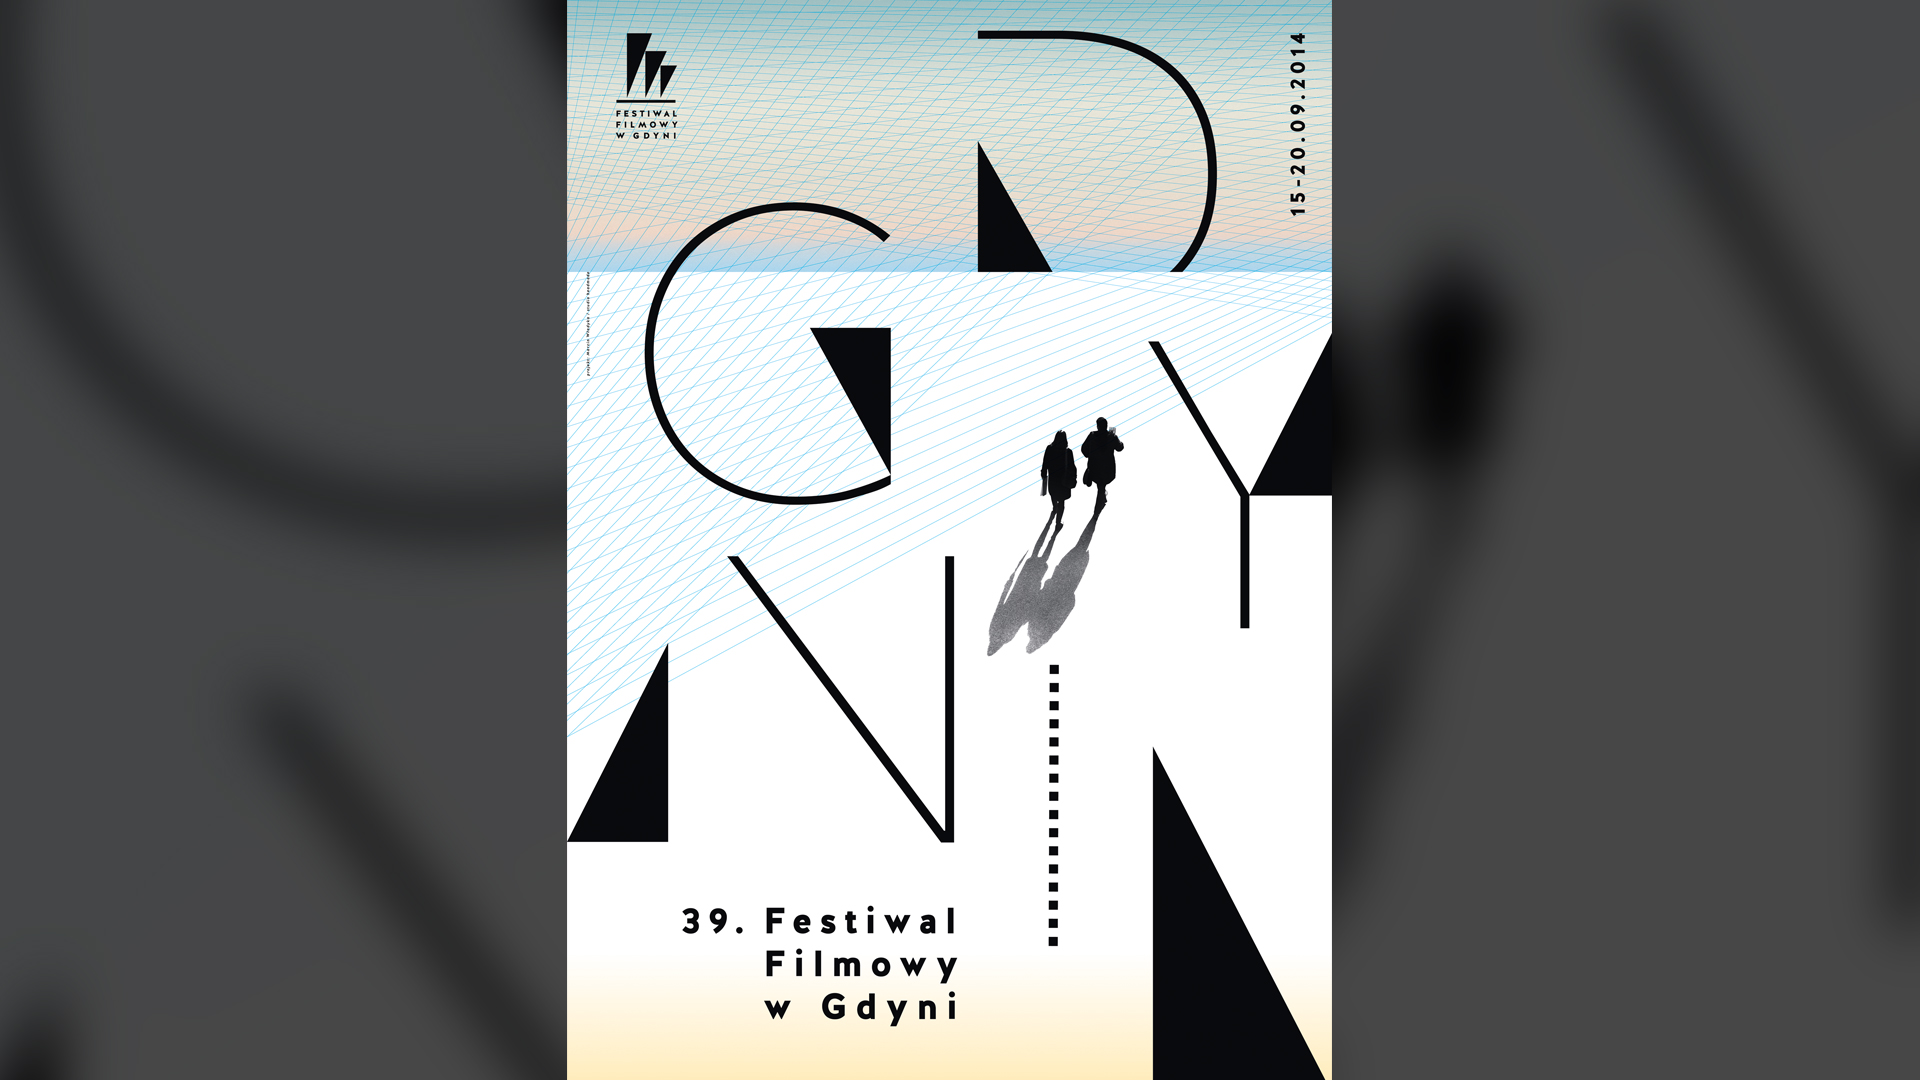 'Fotograf' (The Photographer) directed by Waldema Krzystek on Gdynia Film Festival Festiva